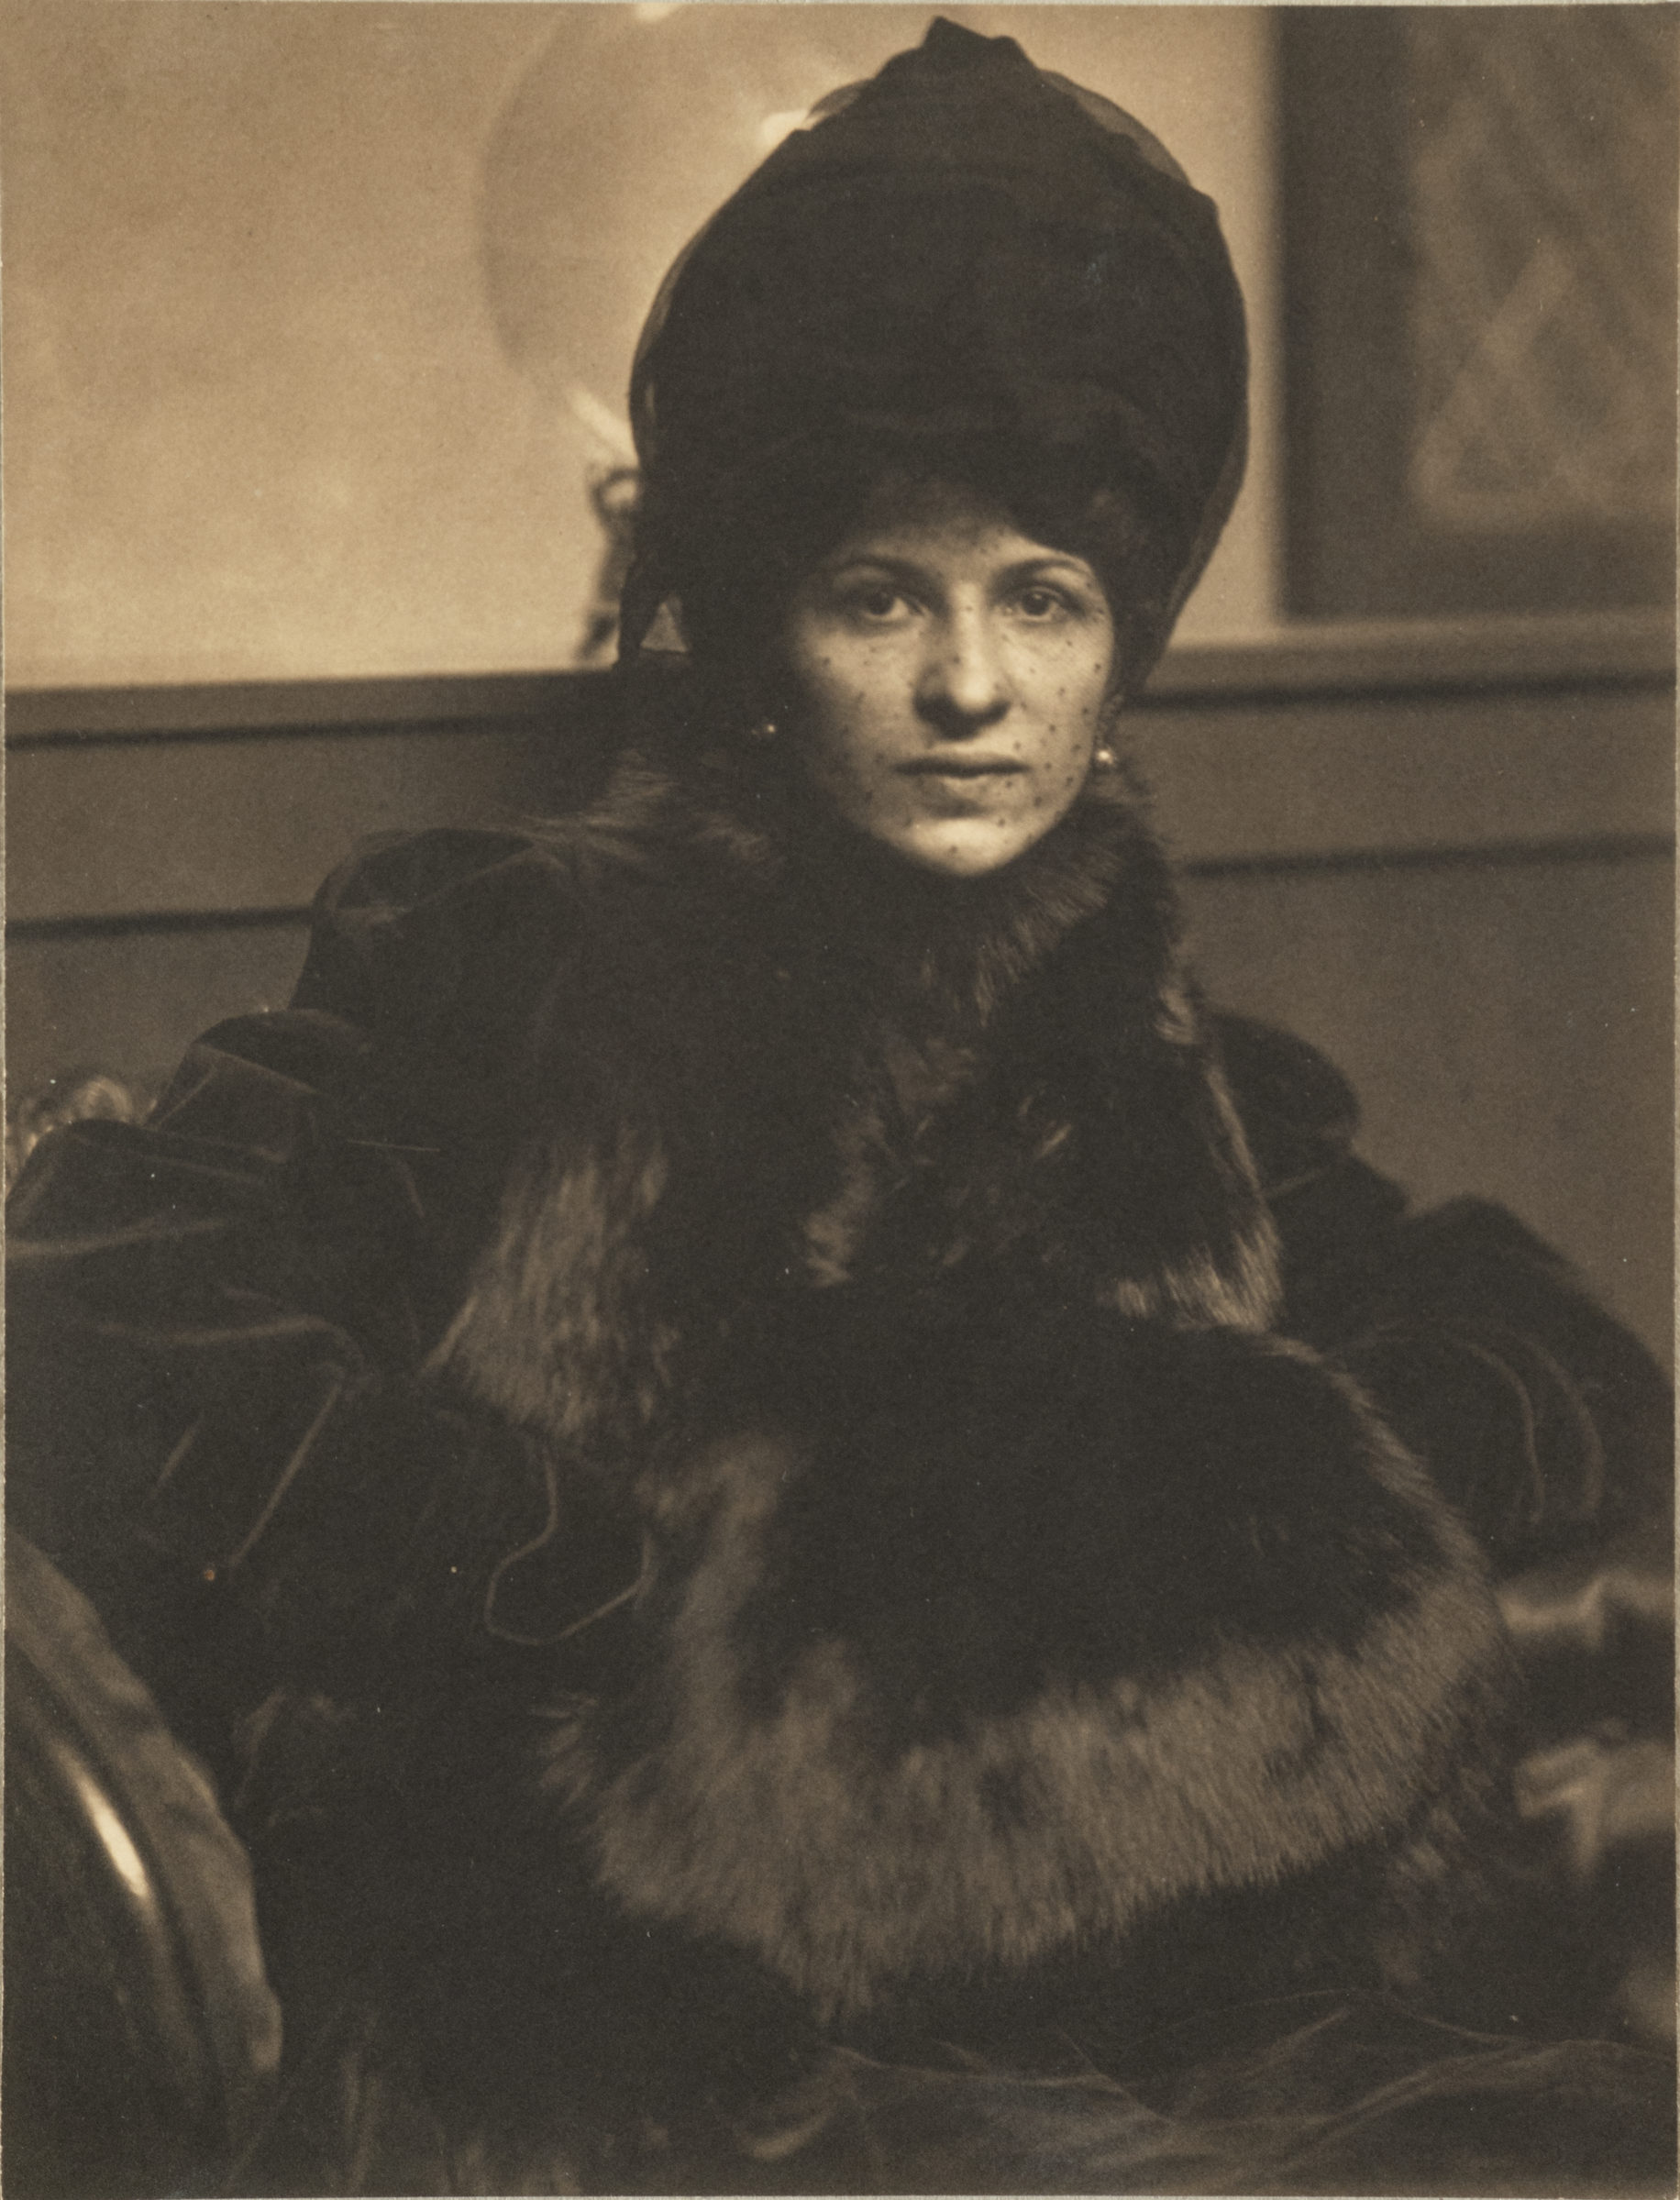 Eulabee Dix'in Portresi (Portrait of Eulabee Dix) by Gertrude Käsebier - 1910 civarında - 7 7/8 x 6 in 